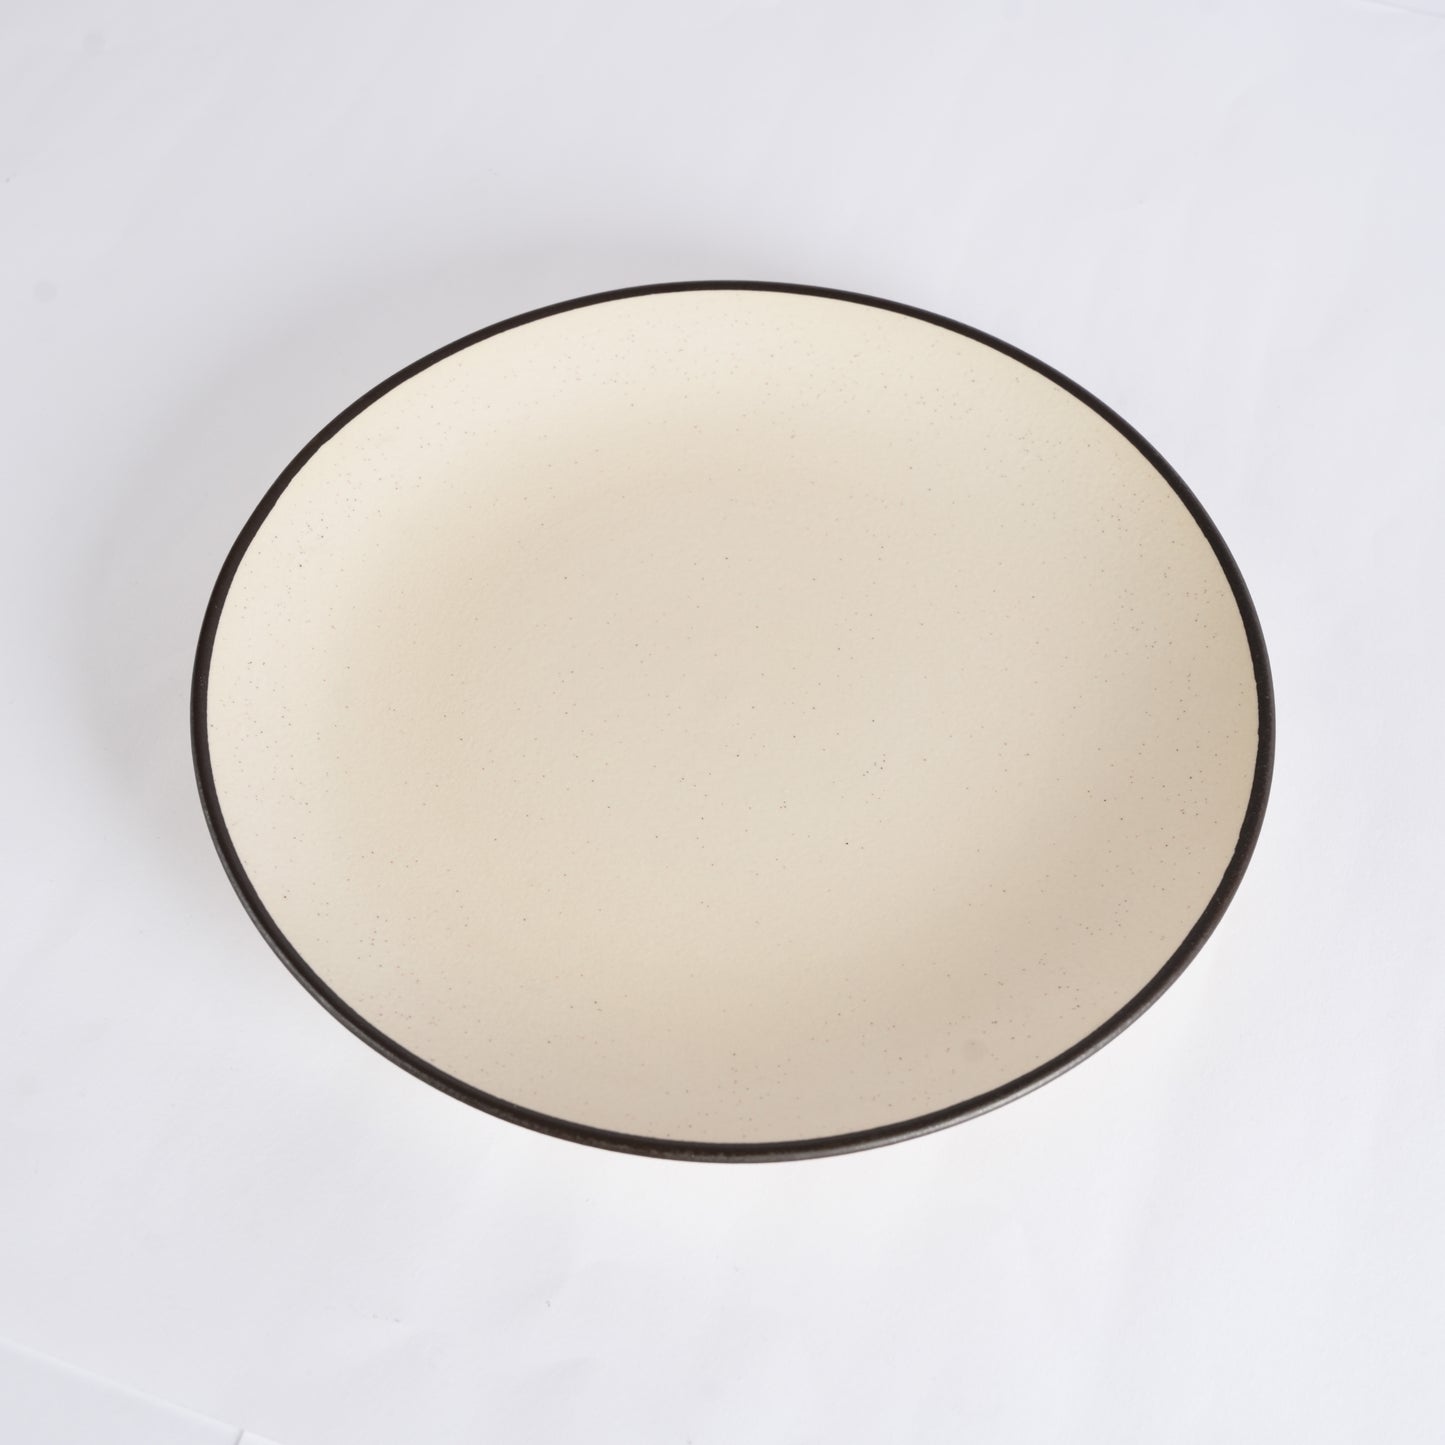 Caffeine Ceramic Handmade Stoneware White and Black Patta Dinner Plates10 inch Set of 6 (Microwave & Dishwasher Safe) - Caffeine Premium Stoneware